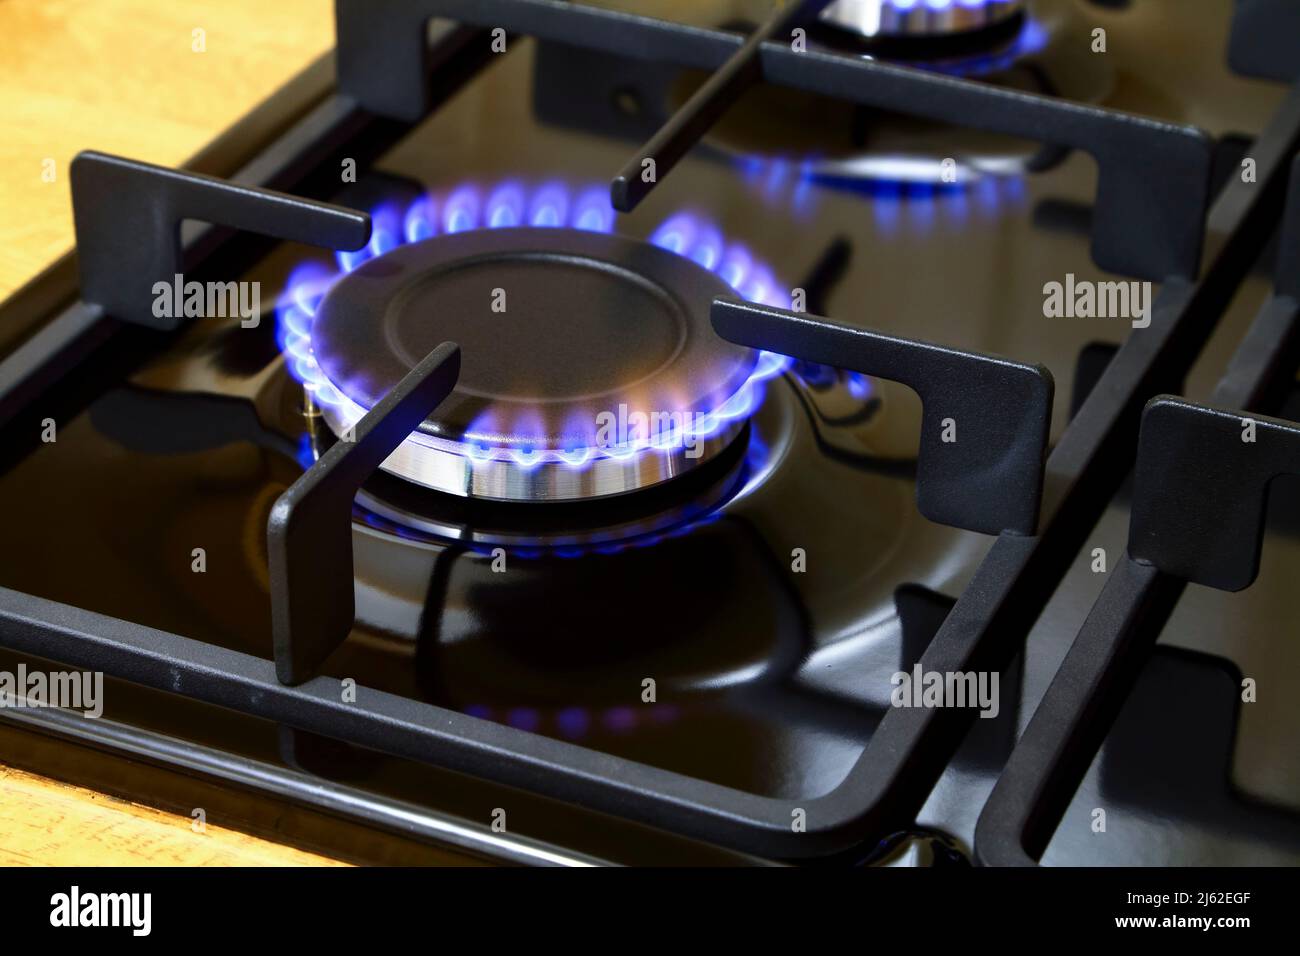 Large burner on a gas hob Stock Photo